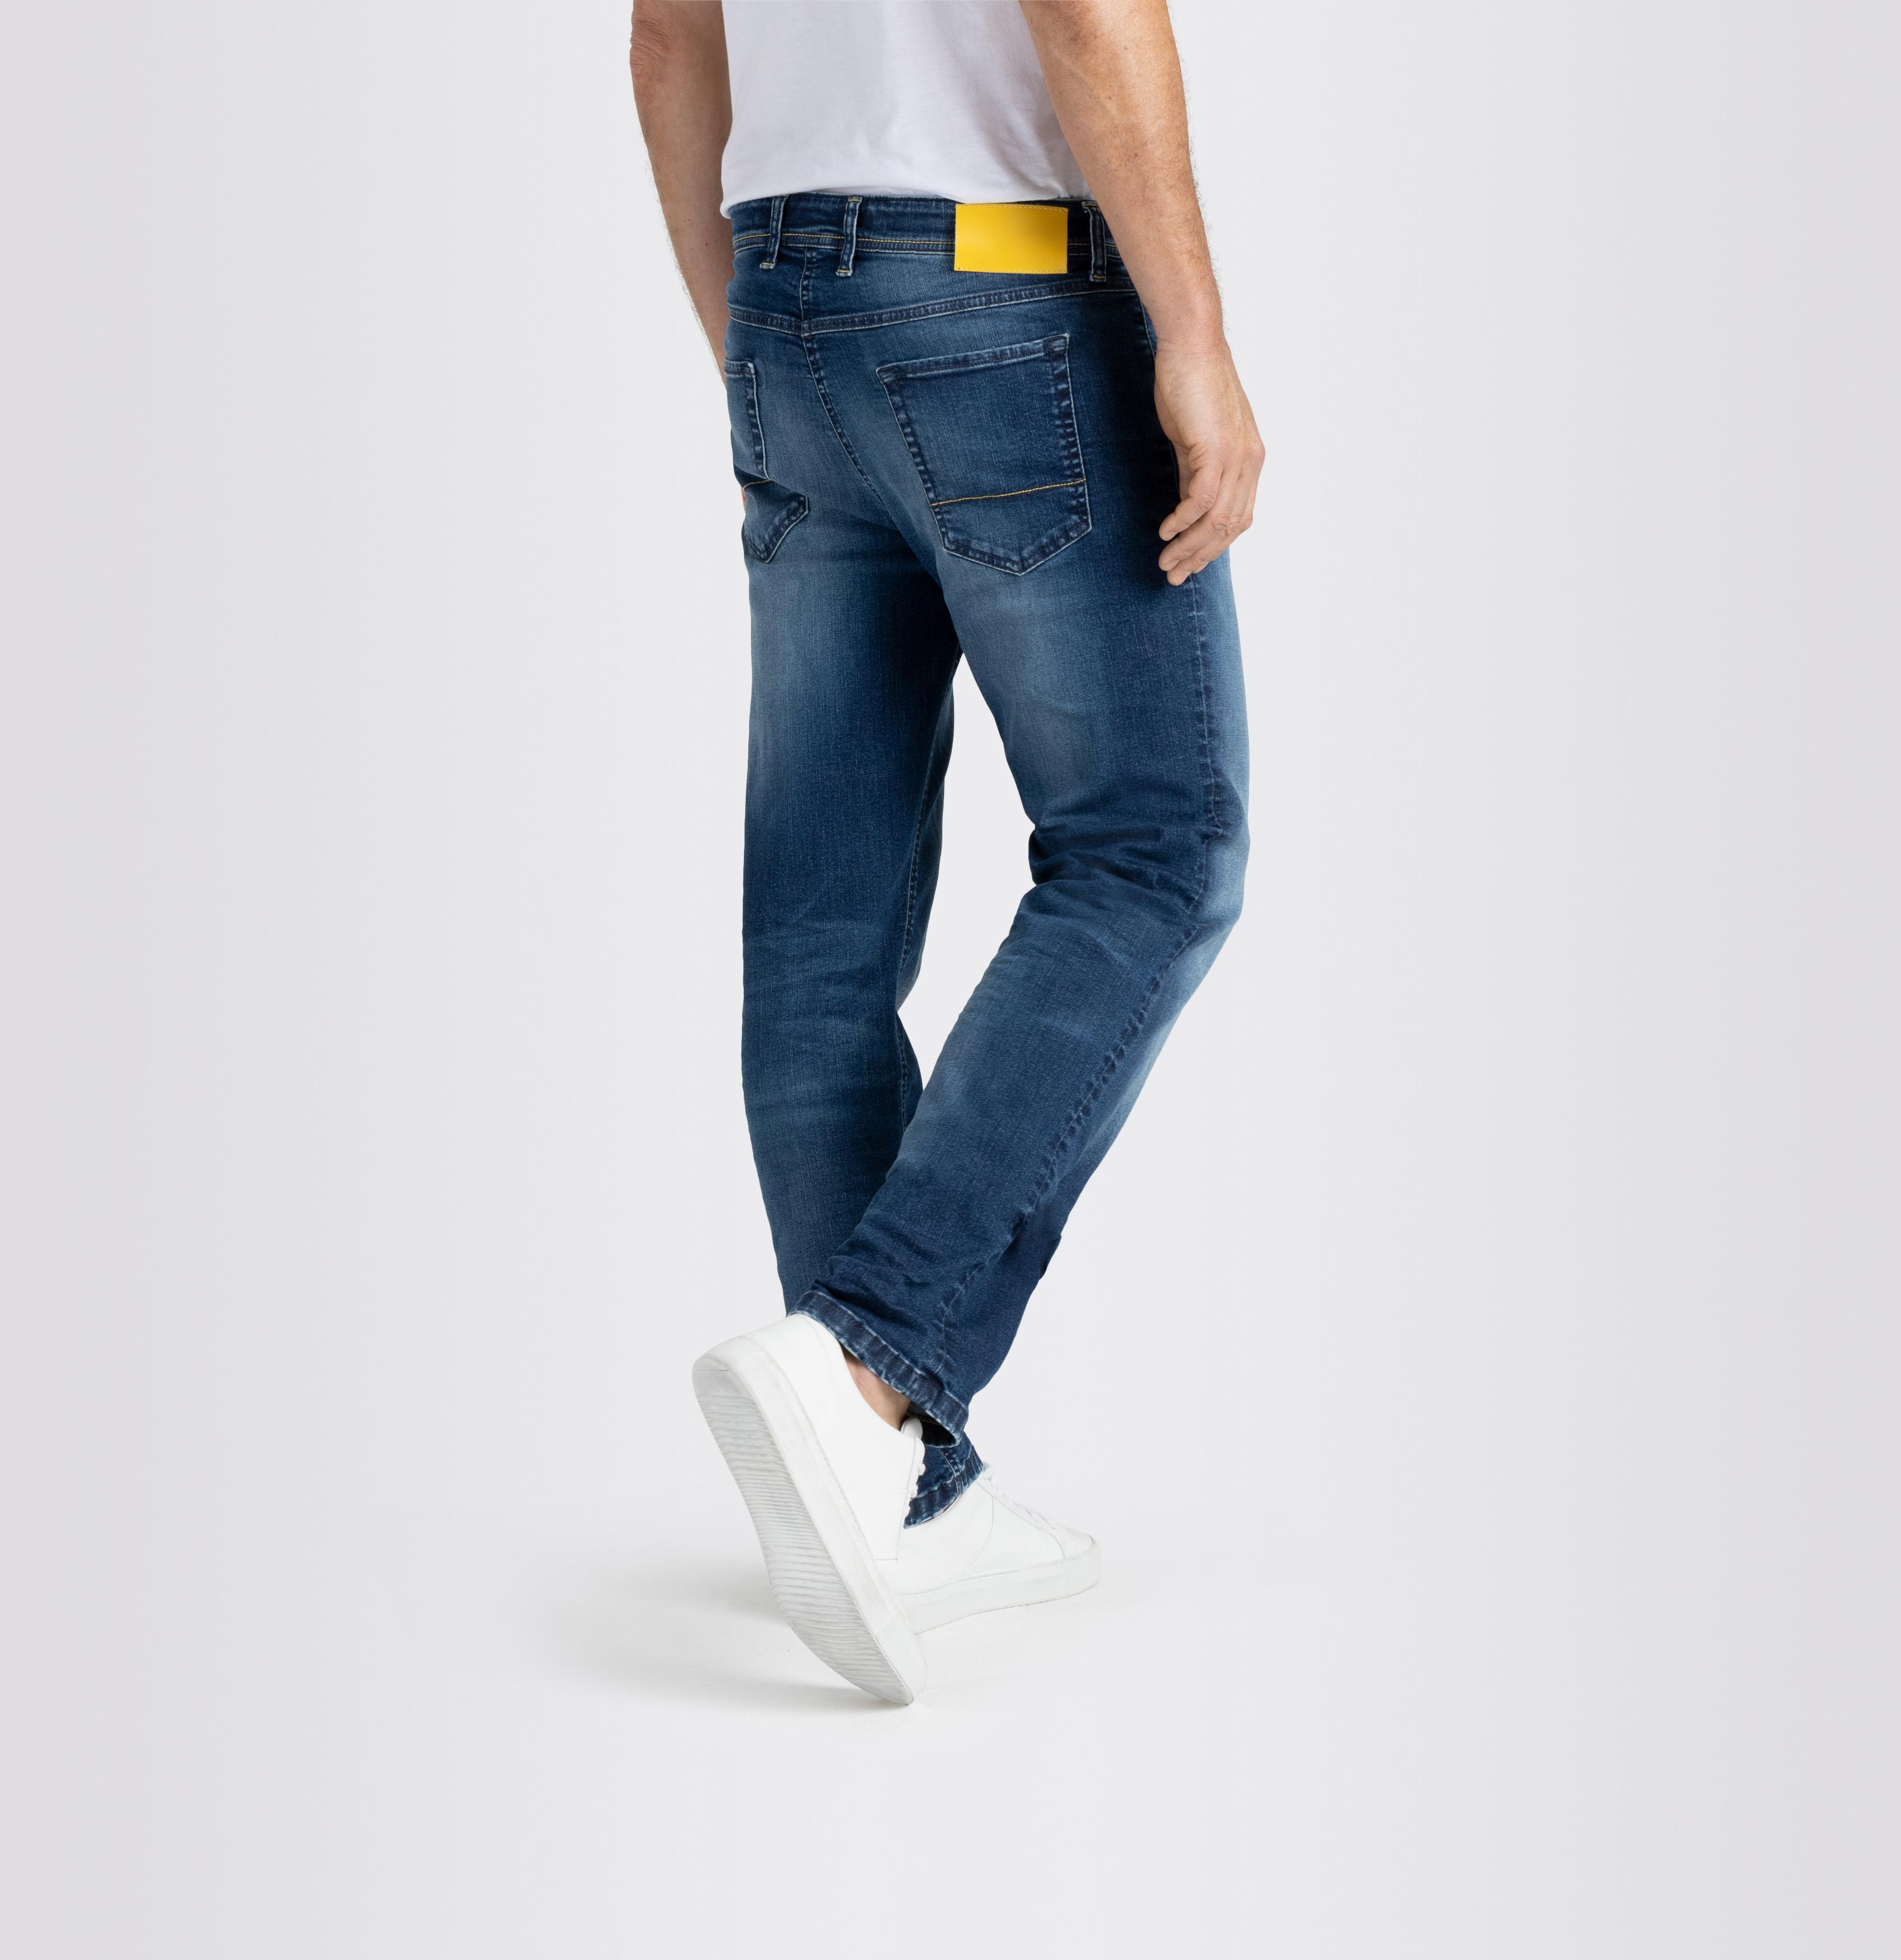 Macflexx, Jeans | H552 FI Macflexx, - Pants, MAC blue Men Shop